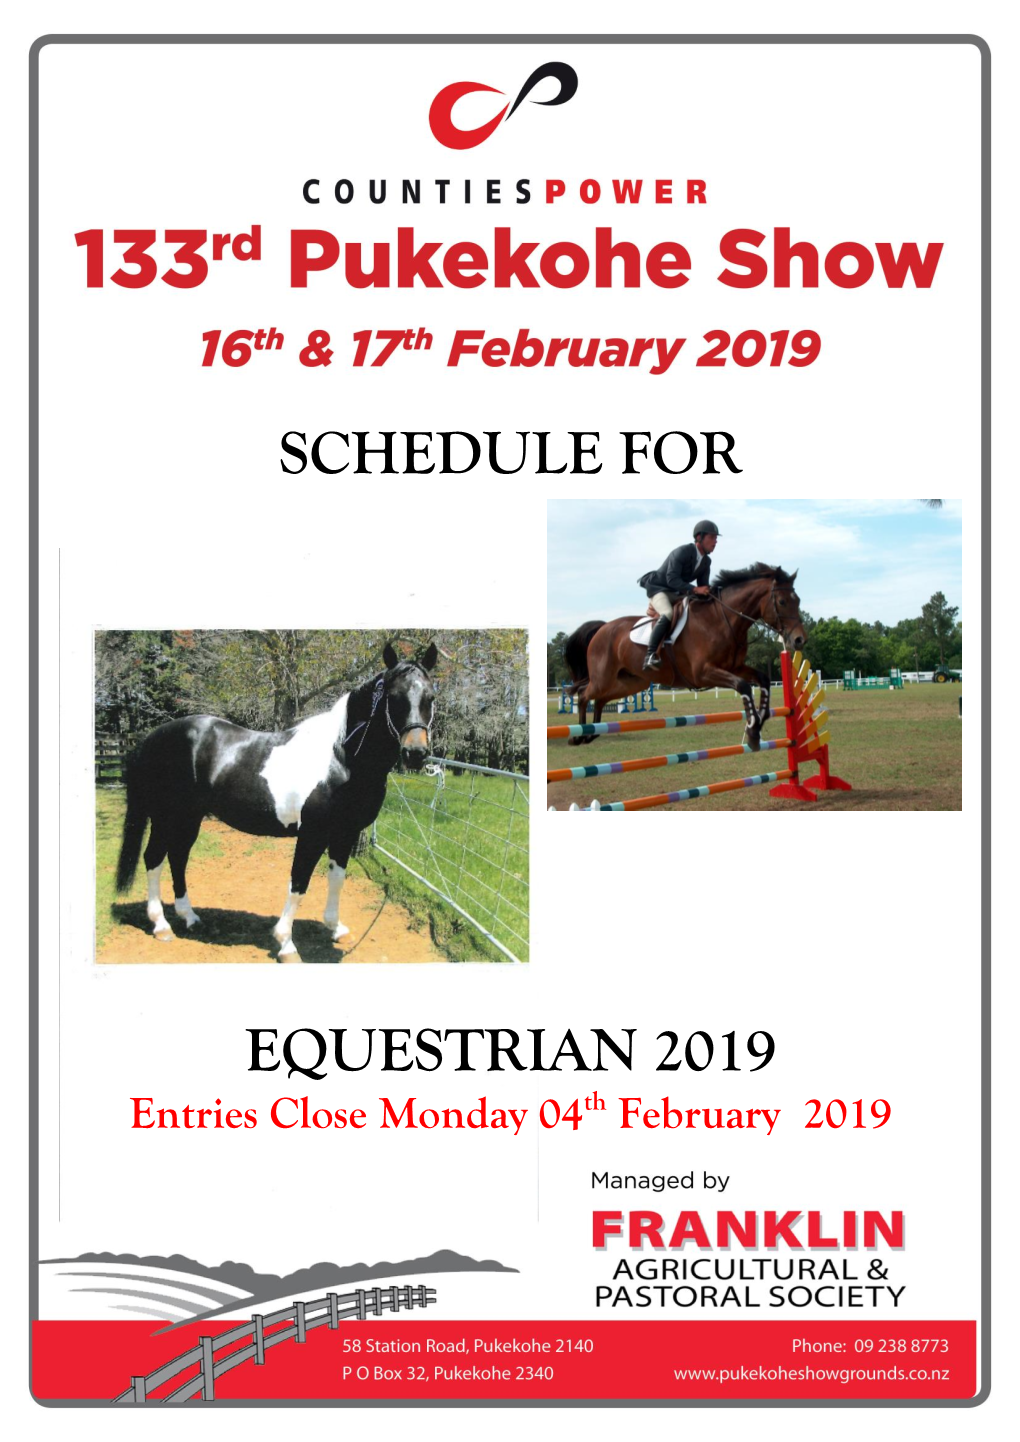 Schedule for Equestrian 2019